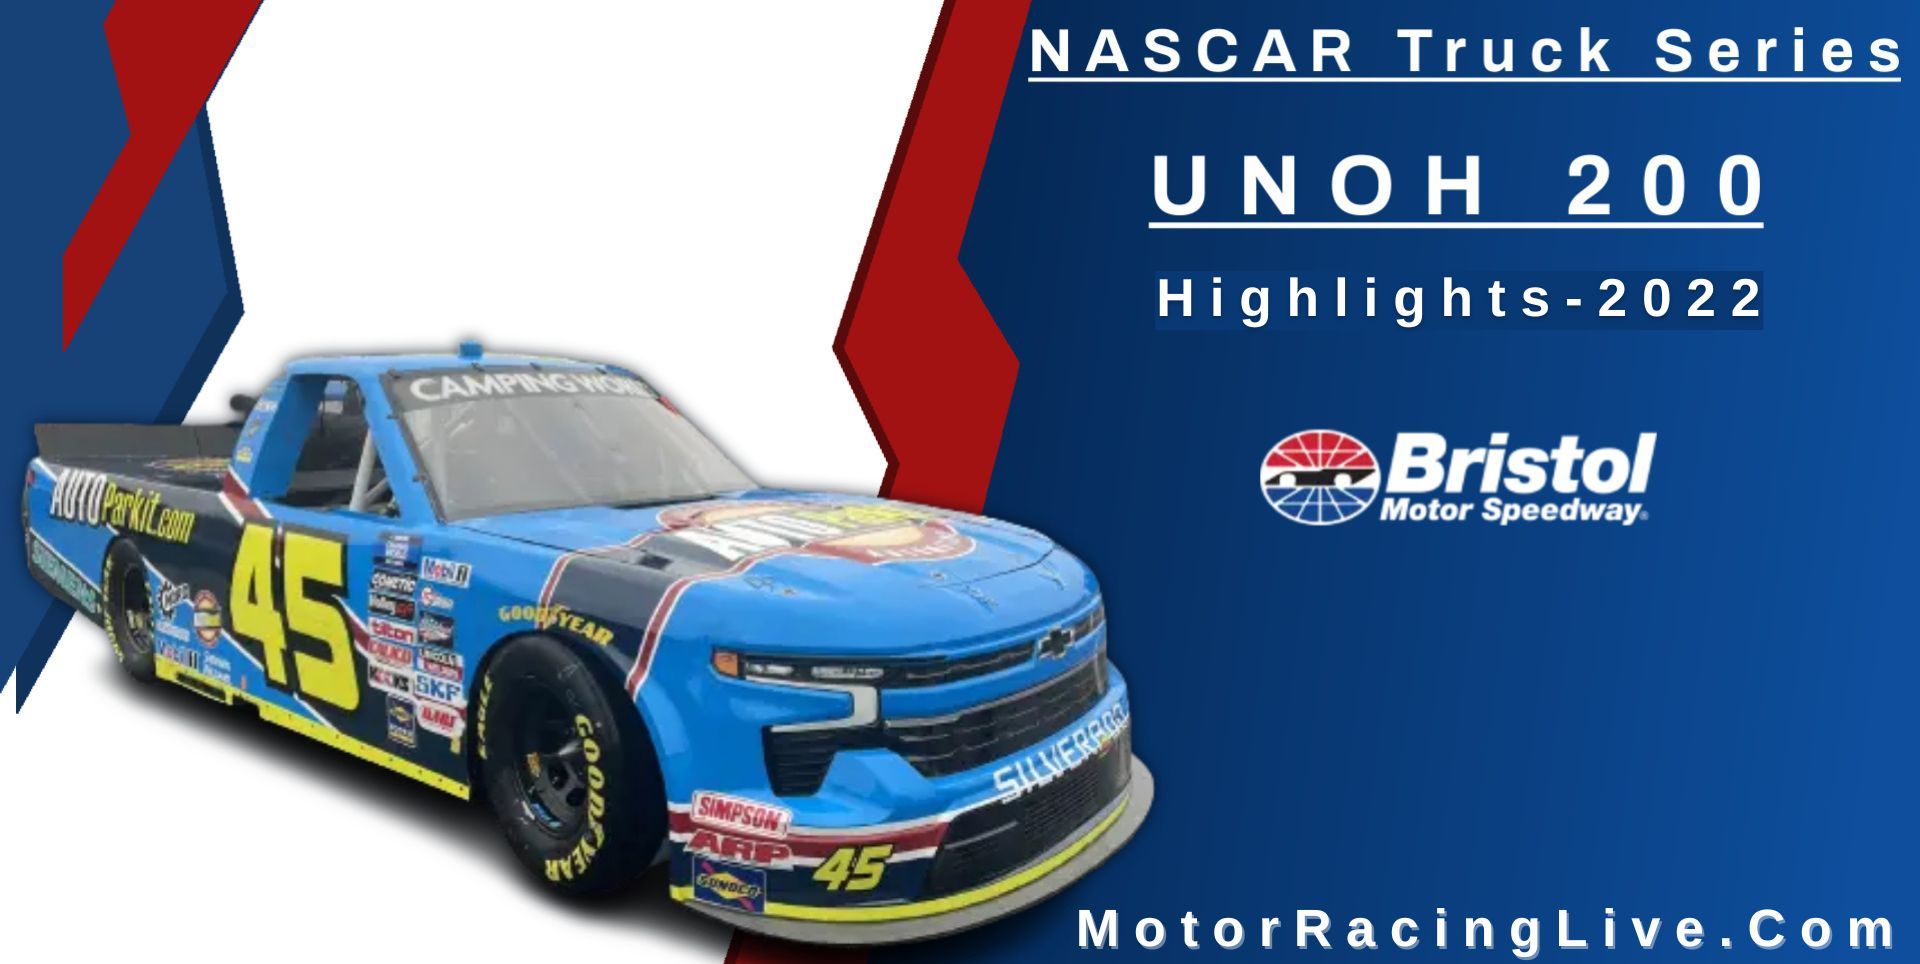 UNOH 200 Highlights 2022 NASCAR Truck